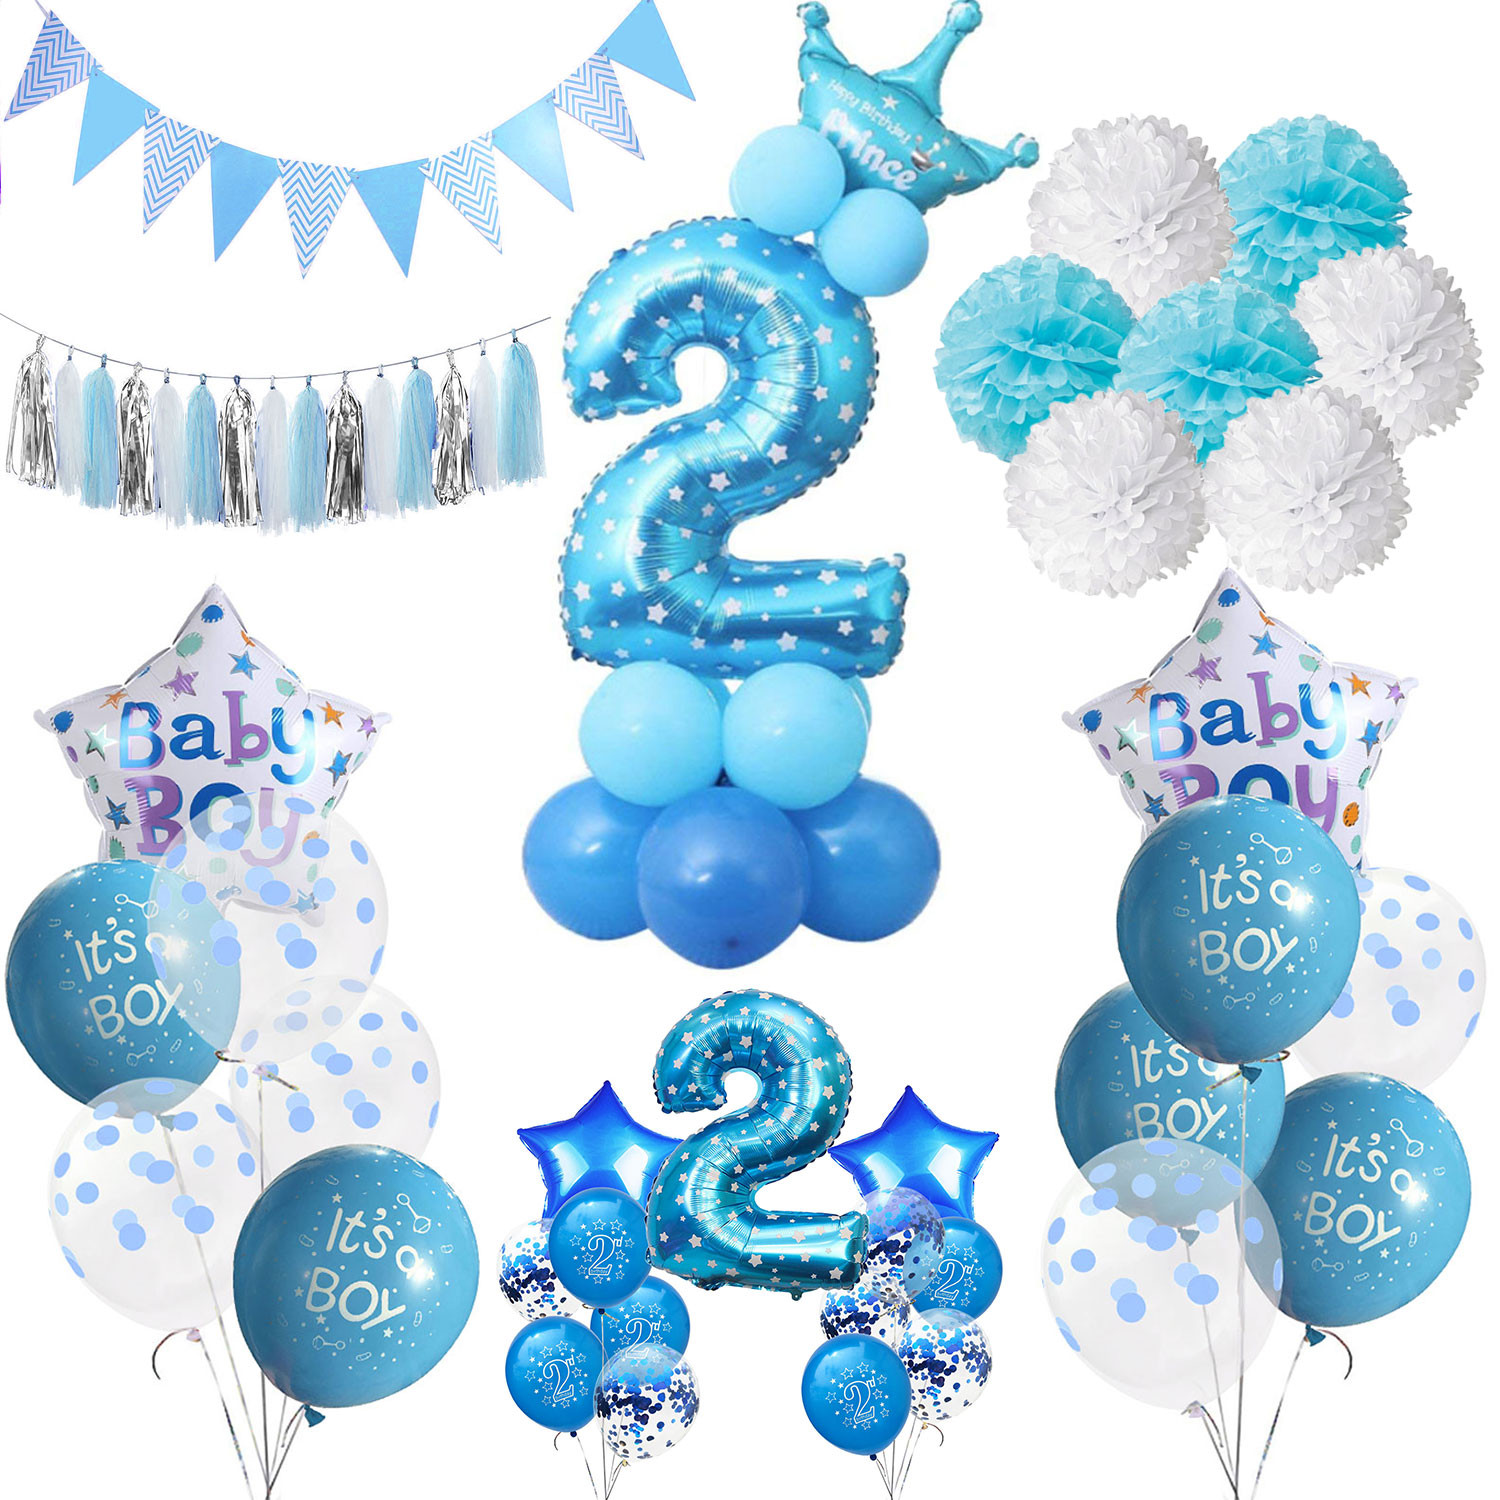 2 Year Old Birthday Party
 ZLJQ Boy 2 Year Old Birthday Party Decor Foil Confetti